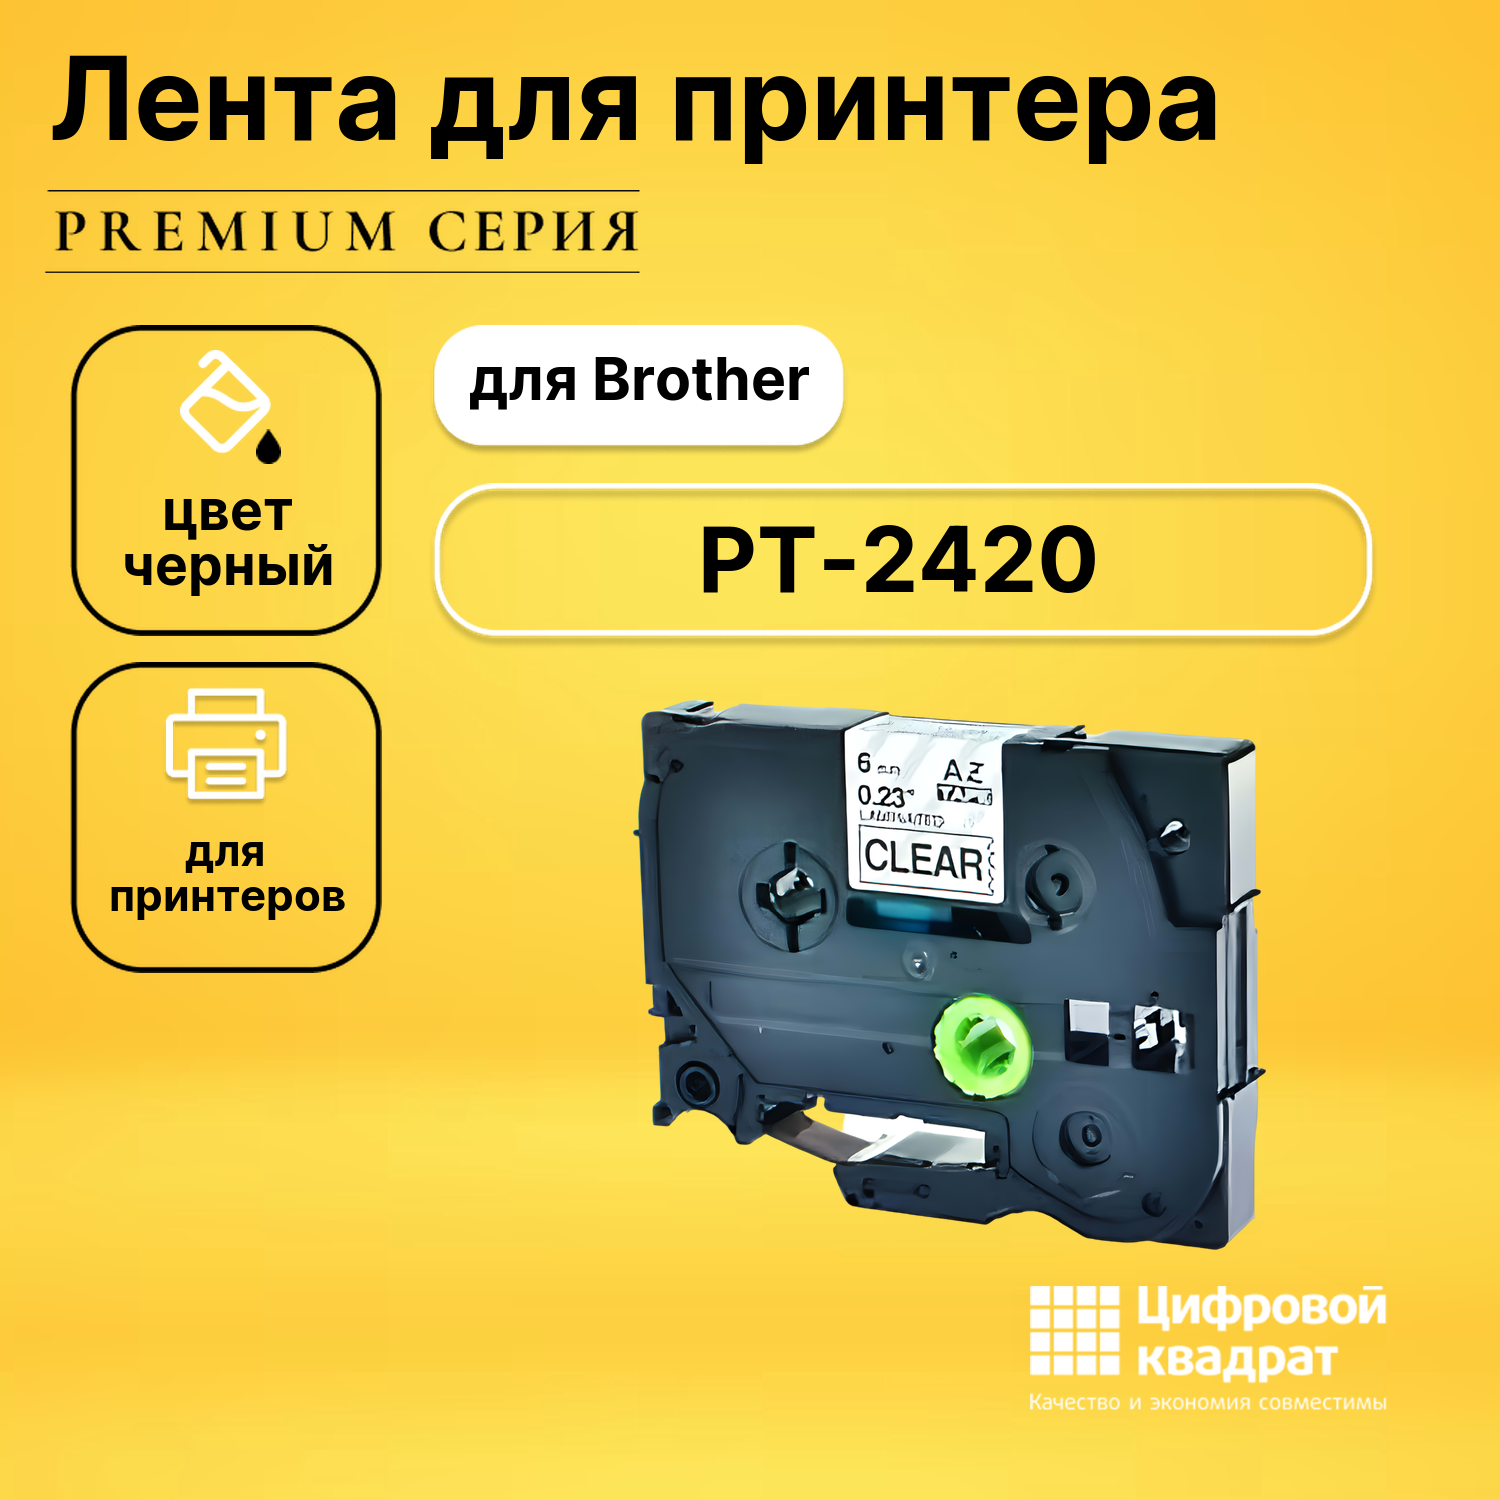 Лента для печати этикеток и наклеек для Brother PT-2420